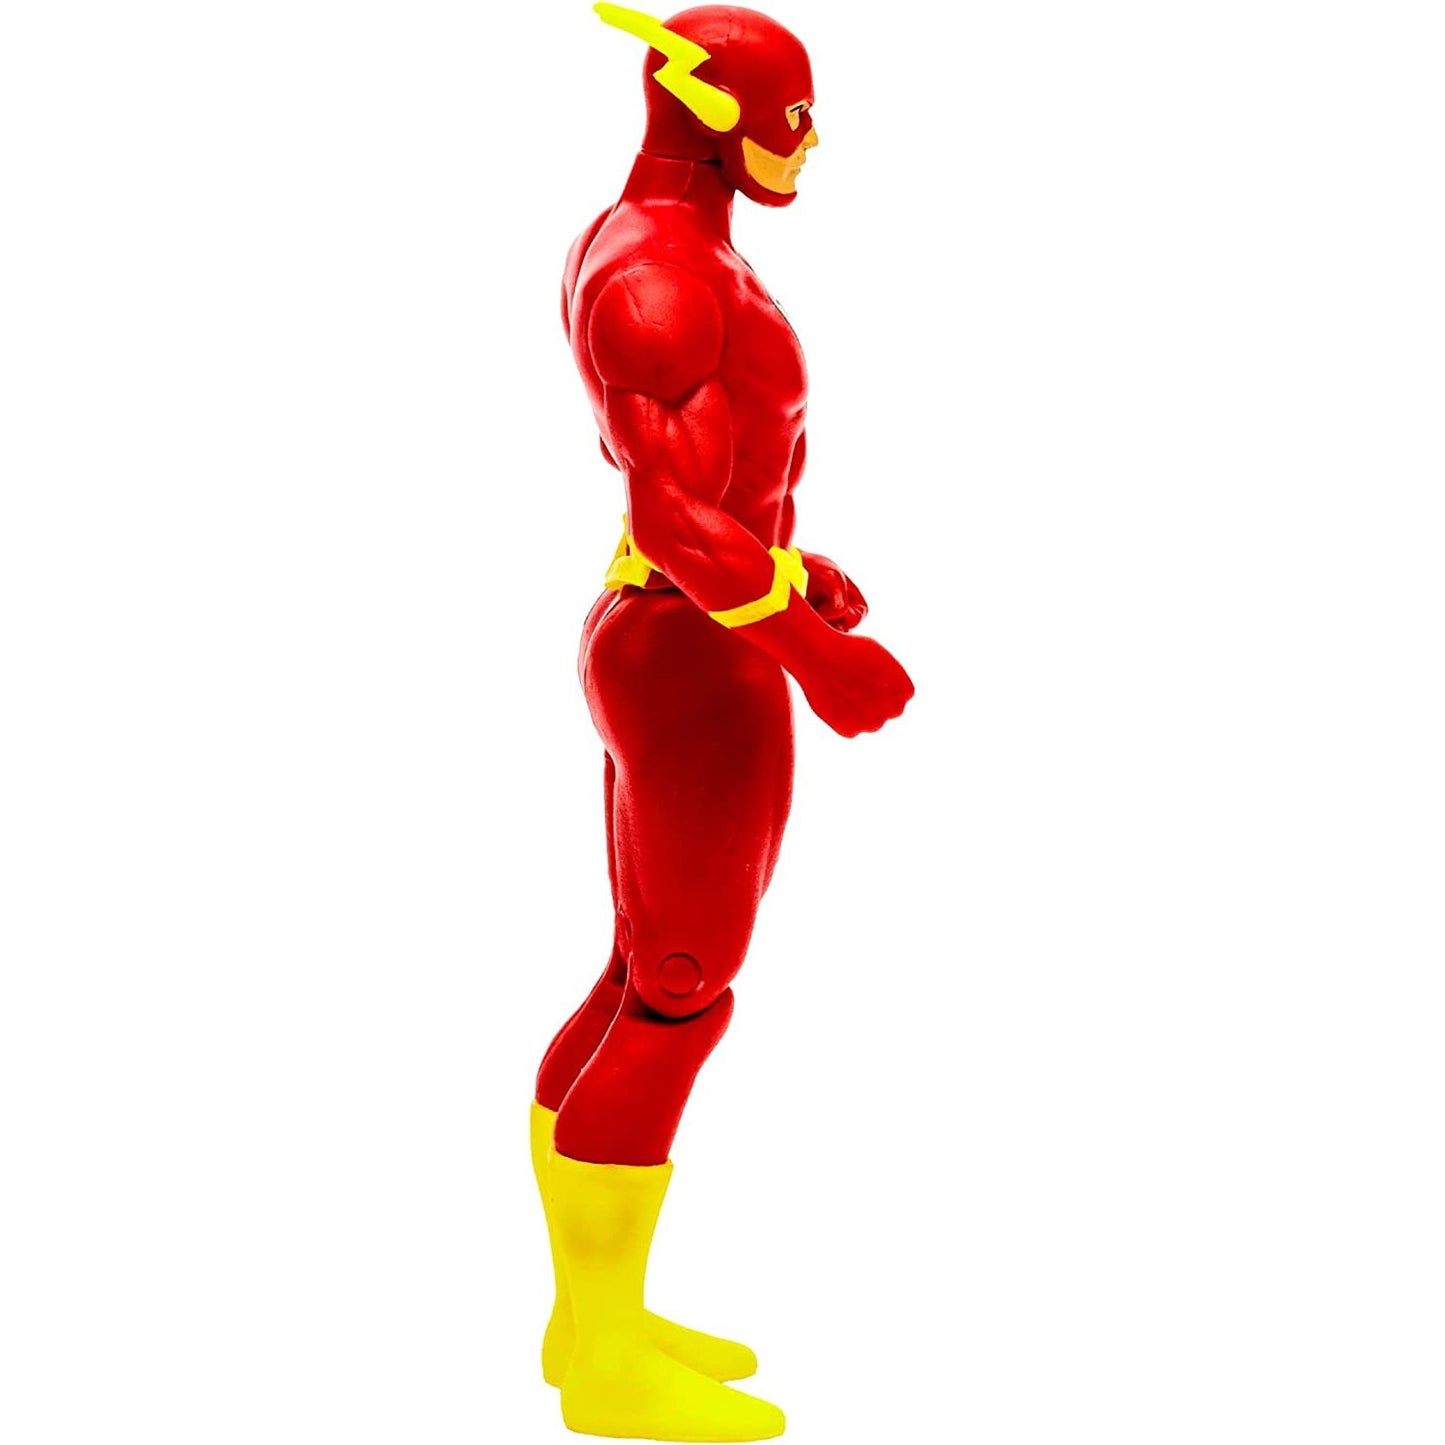 DC Direct - Super Powers - The Flash Figure - Heretoserveyou